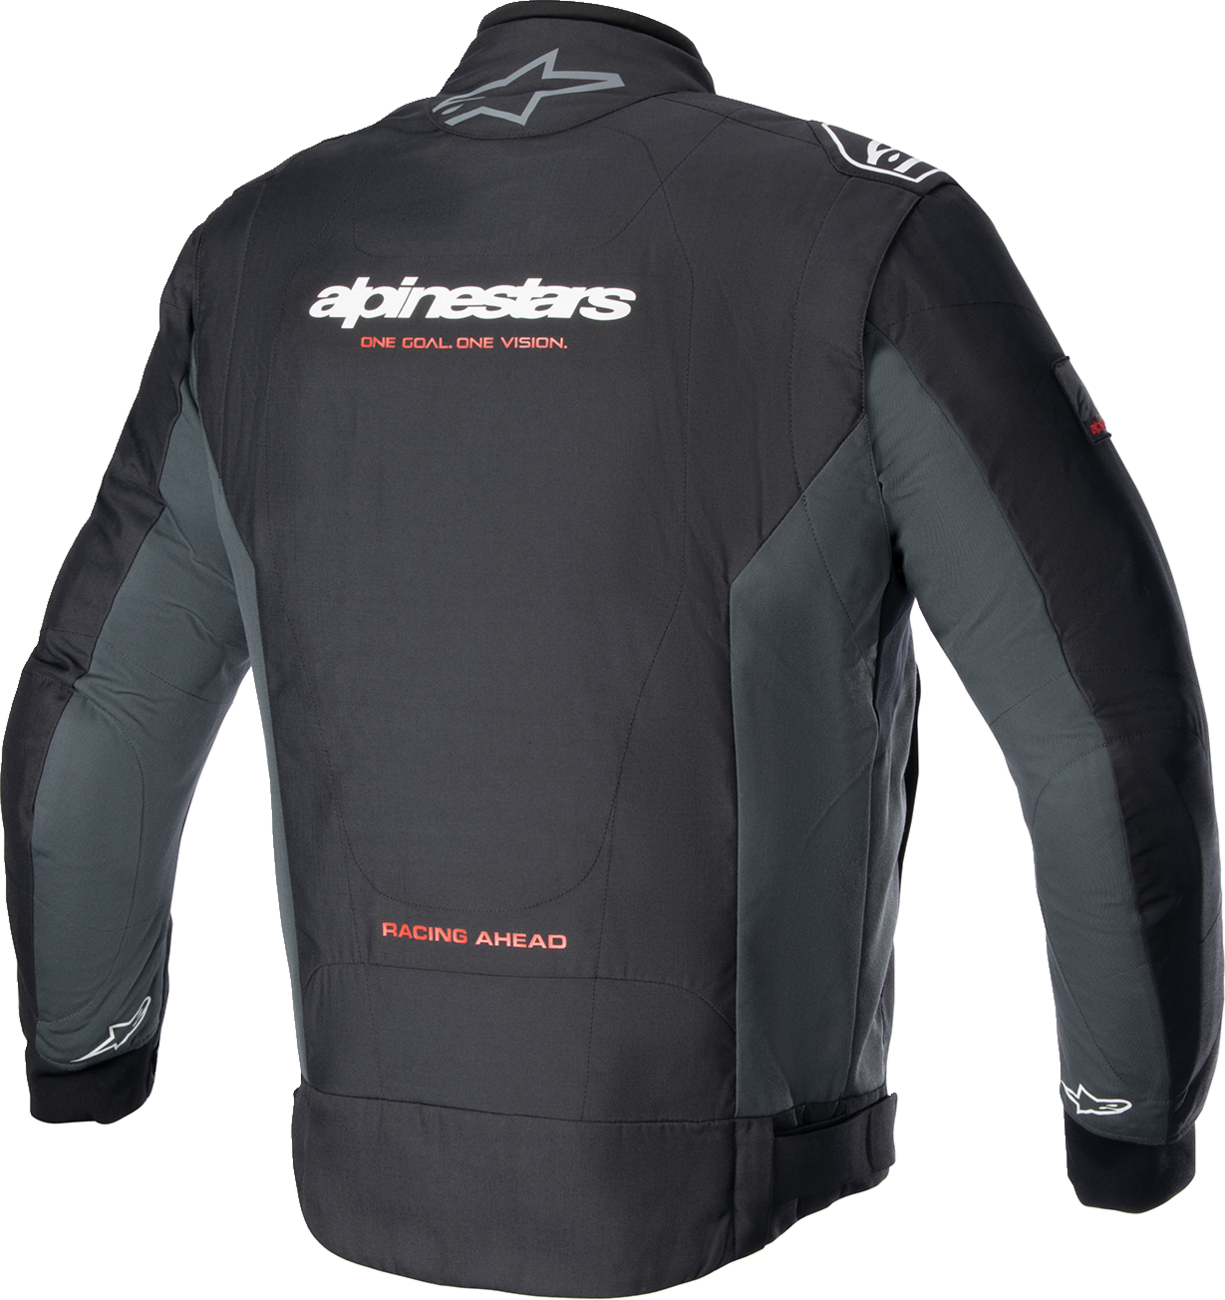 ALPINESTARS Monza Sport Jacket - Black/Gray - Small 3306723-1169-S